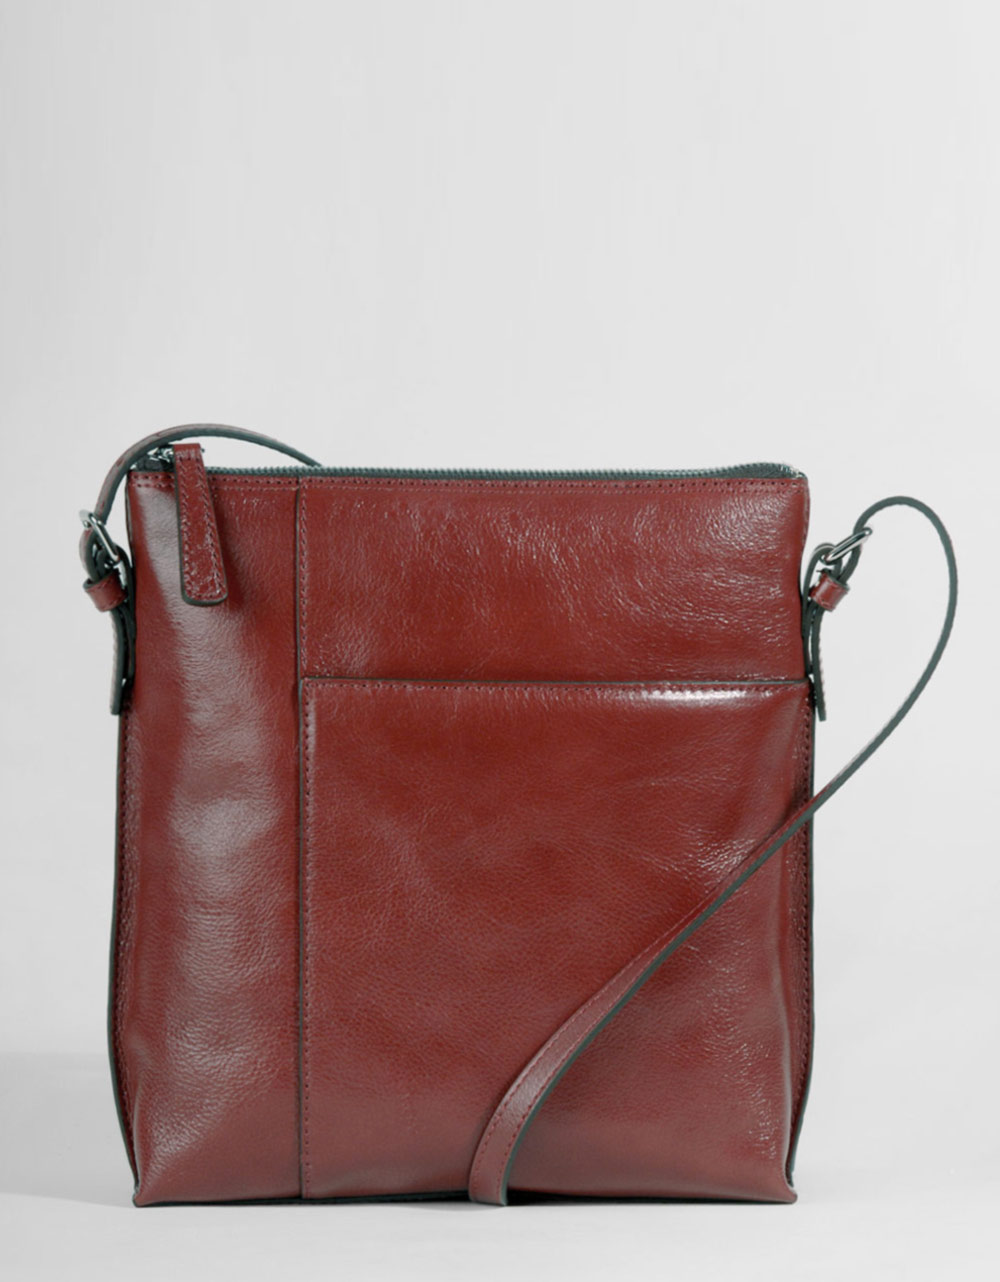 Hobo International Alessa Leather Cross-body Bag in Red - Lyst